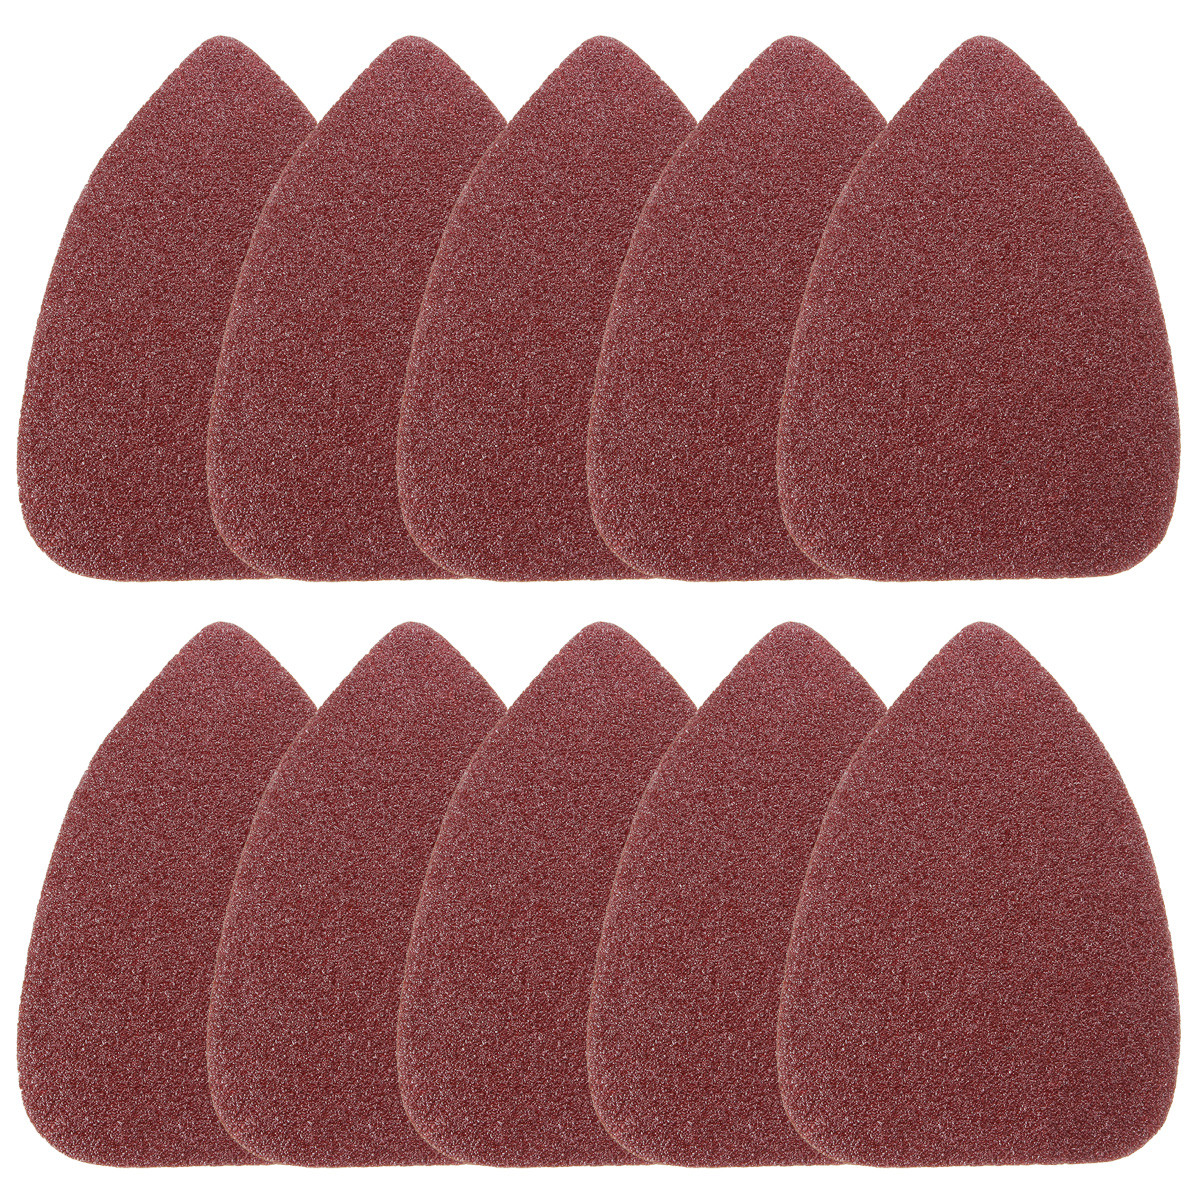 

10pcs 100mm Triangle Sandpaper Sanding Discs Abrasive Sheets Mouse Sander Pads